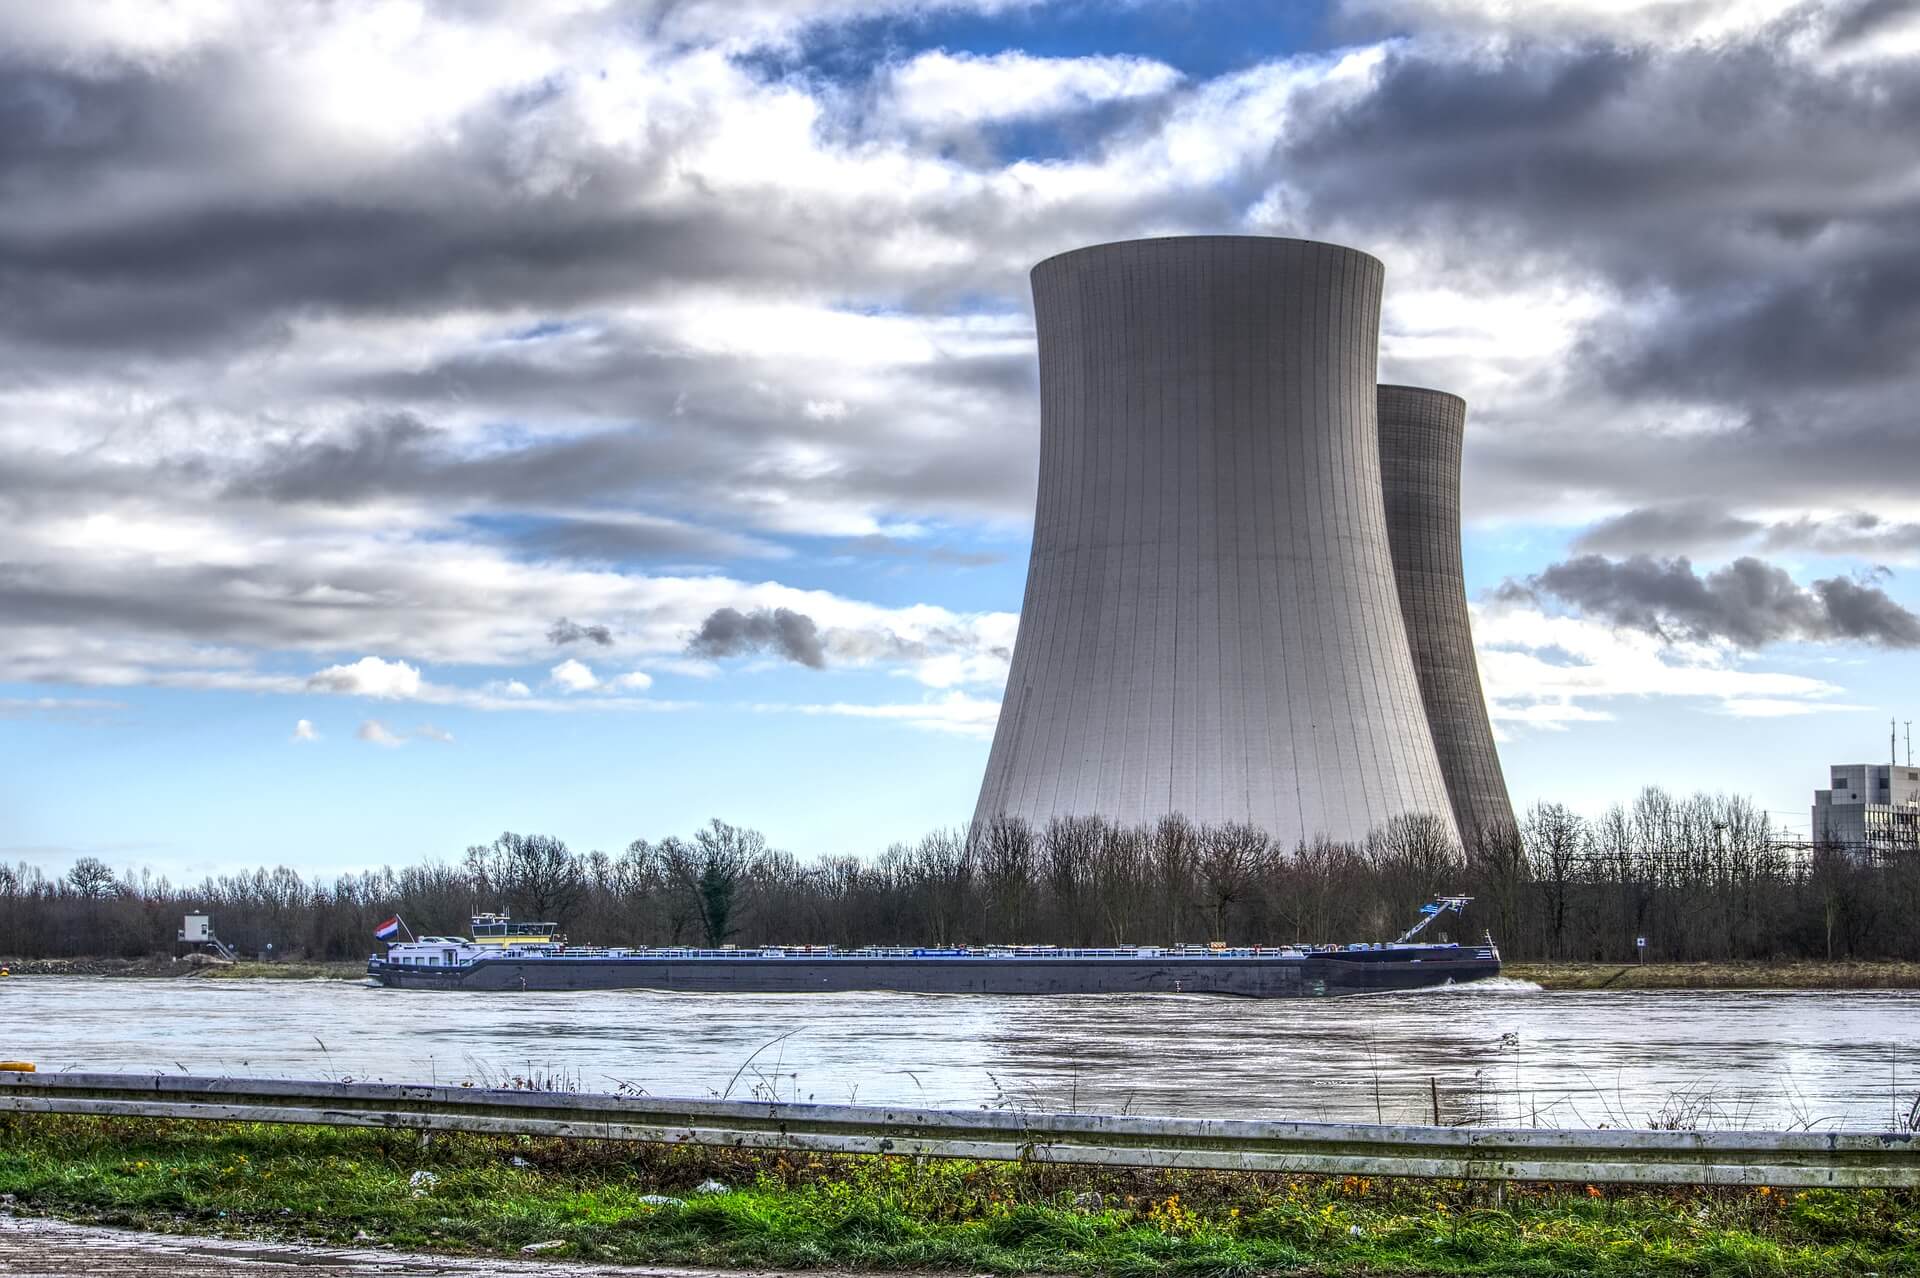 Heffron - Nuclear power plant. Markus Distelrath - Pixabay